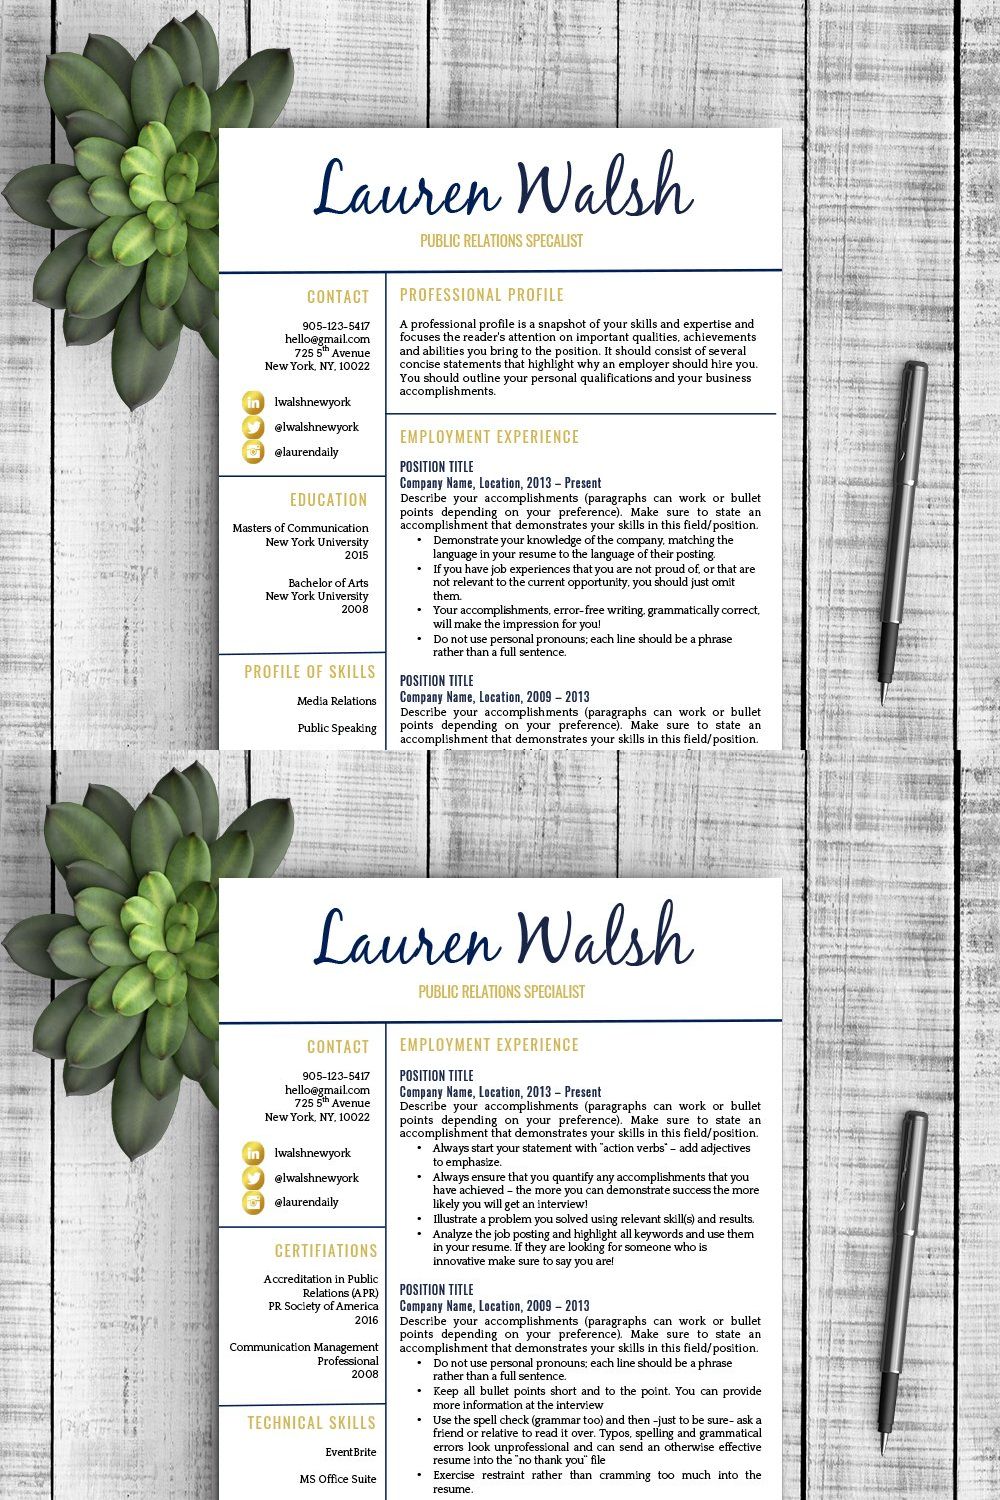 Resume Template - Lauren pinterest preview image.